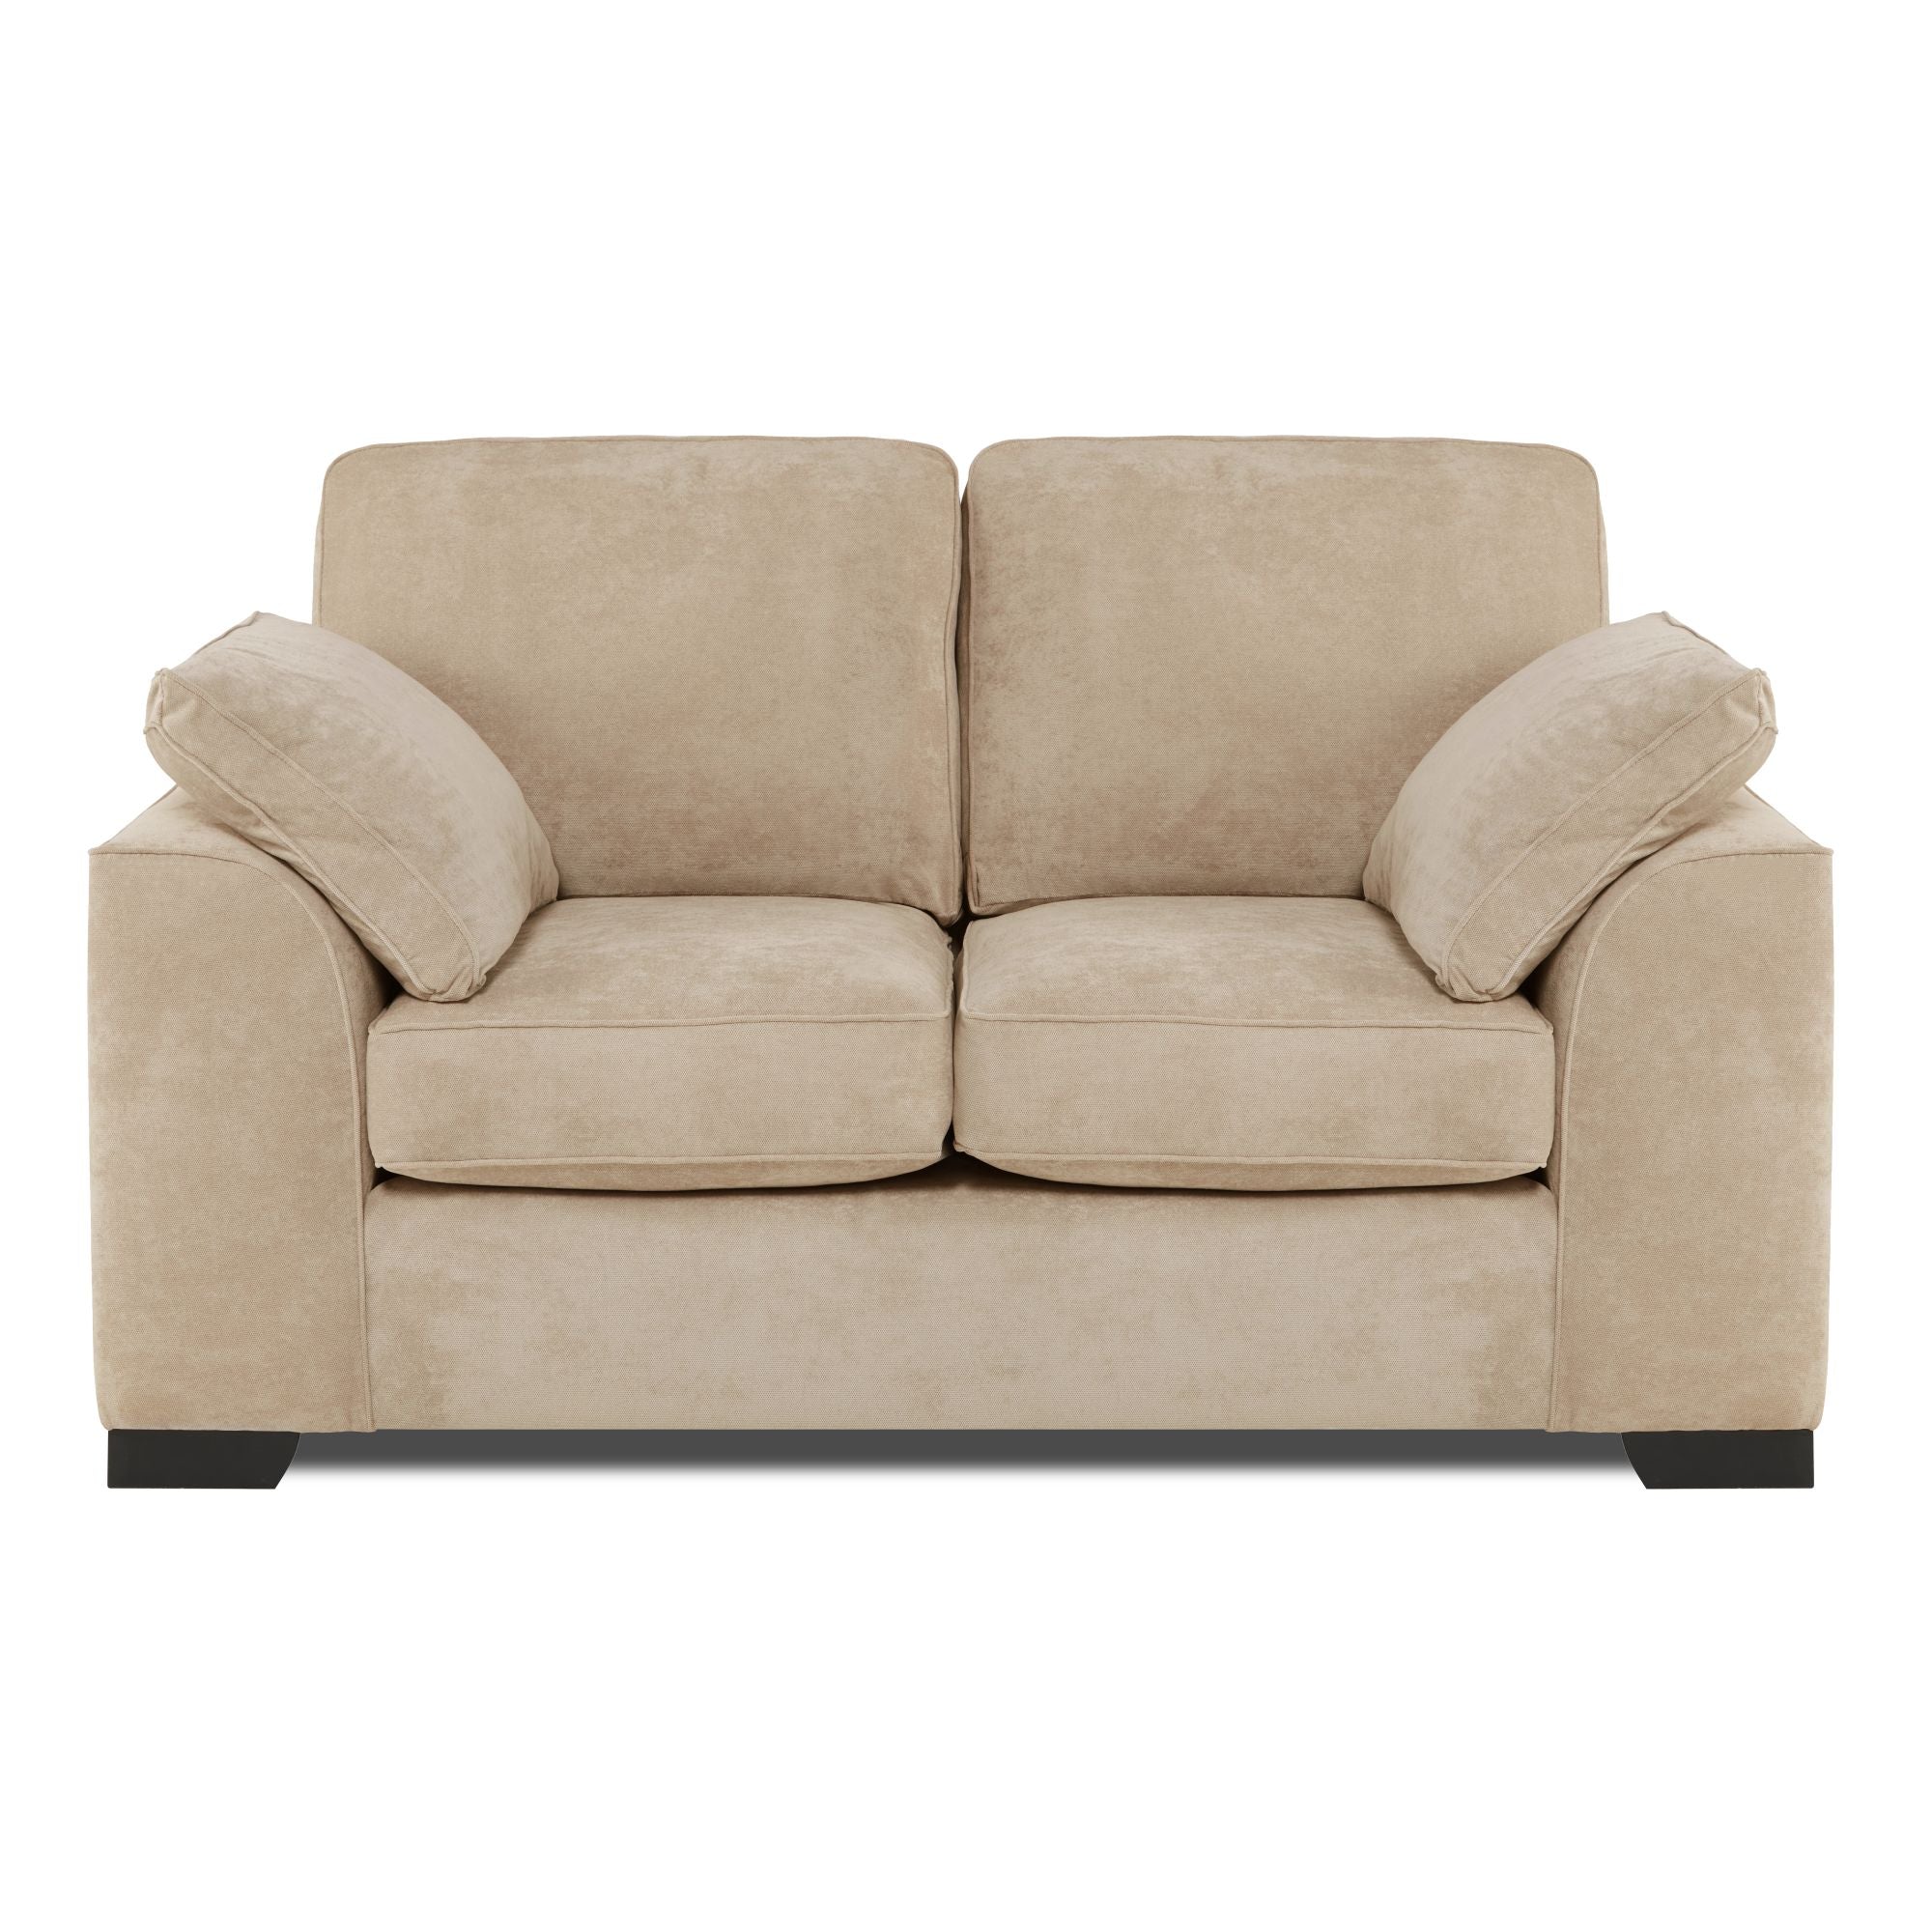 Lawson 2 Seater Sofa